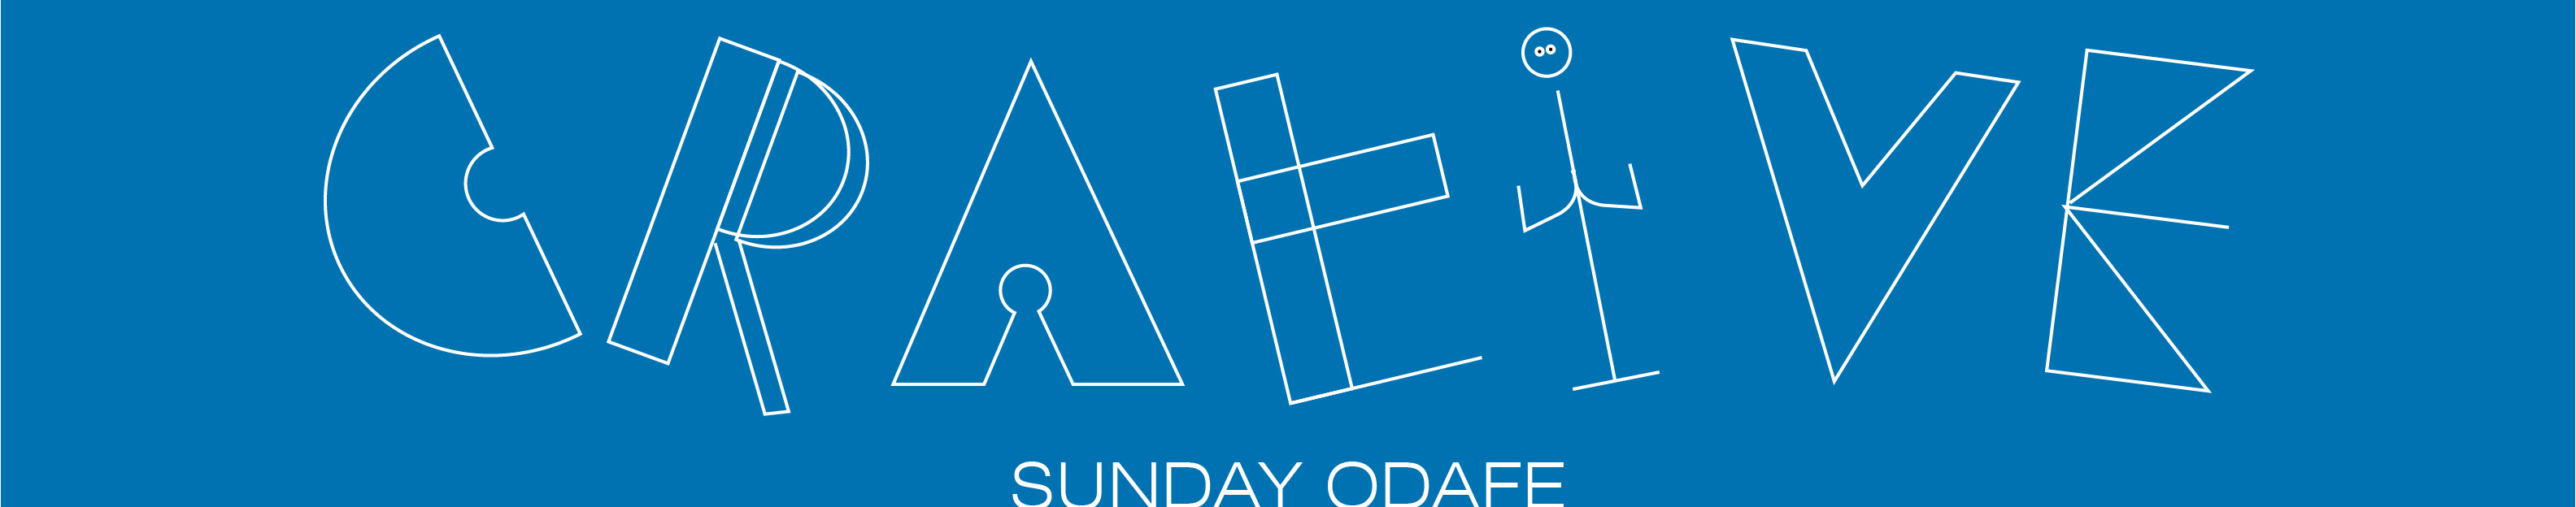 Sunday Odafe's profile banner